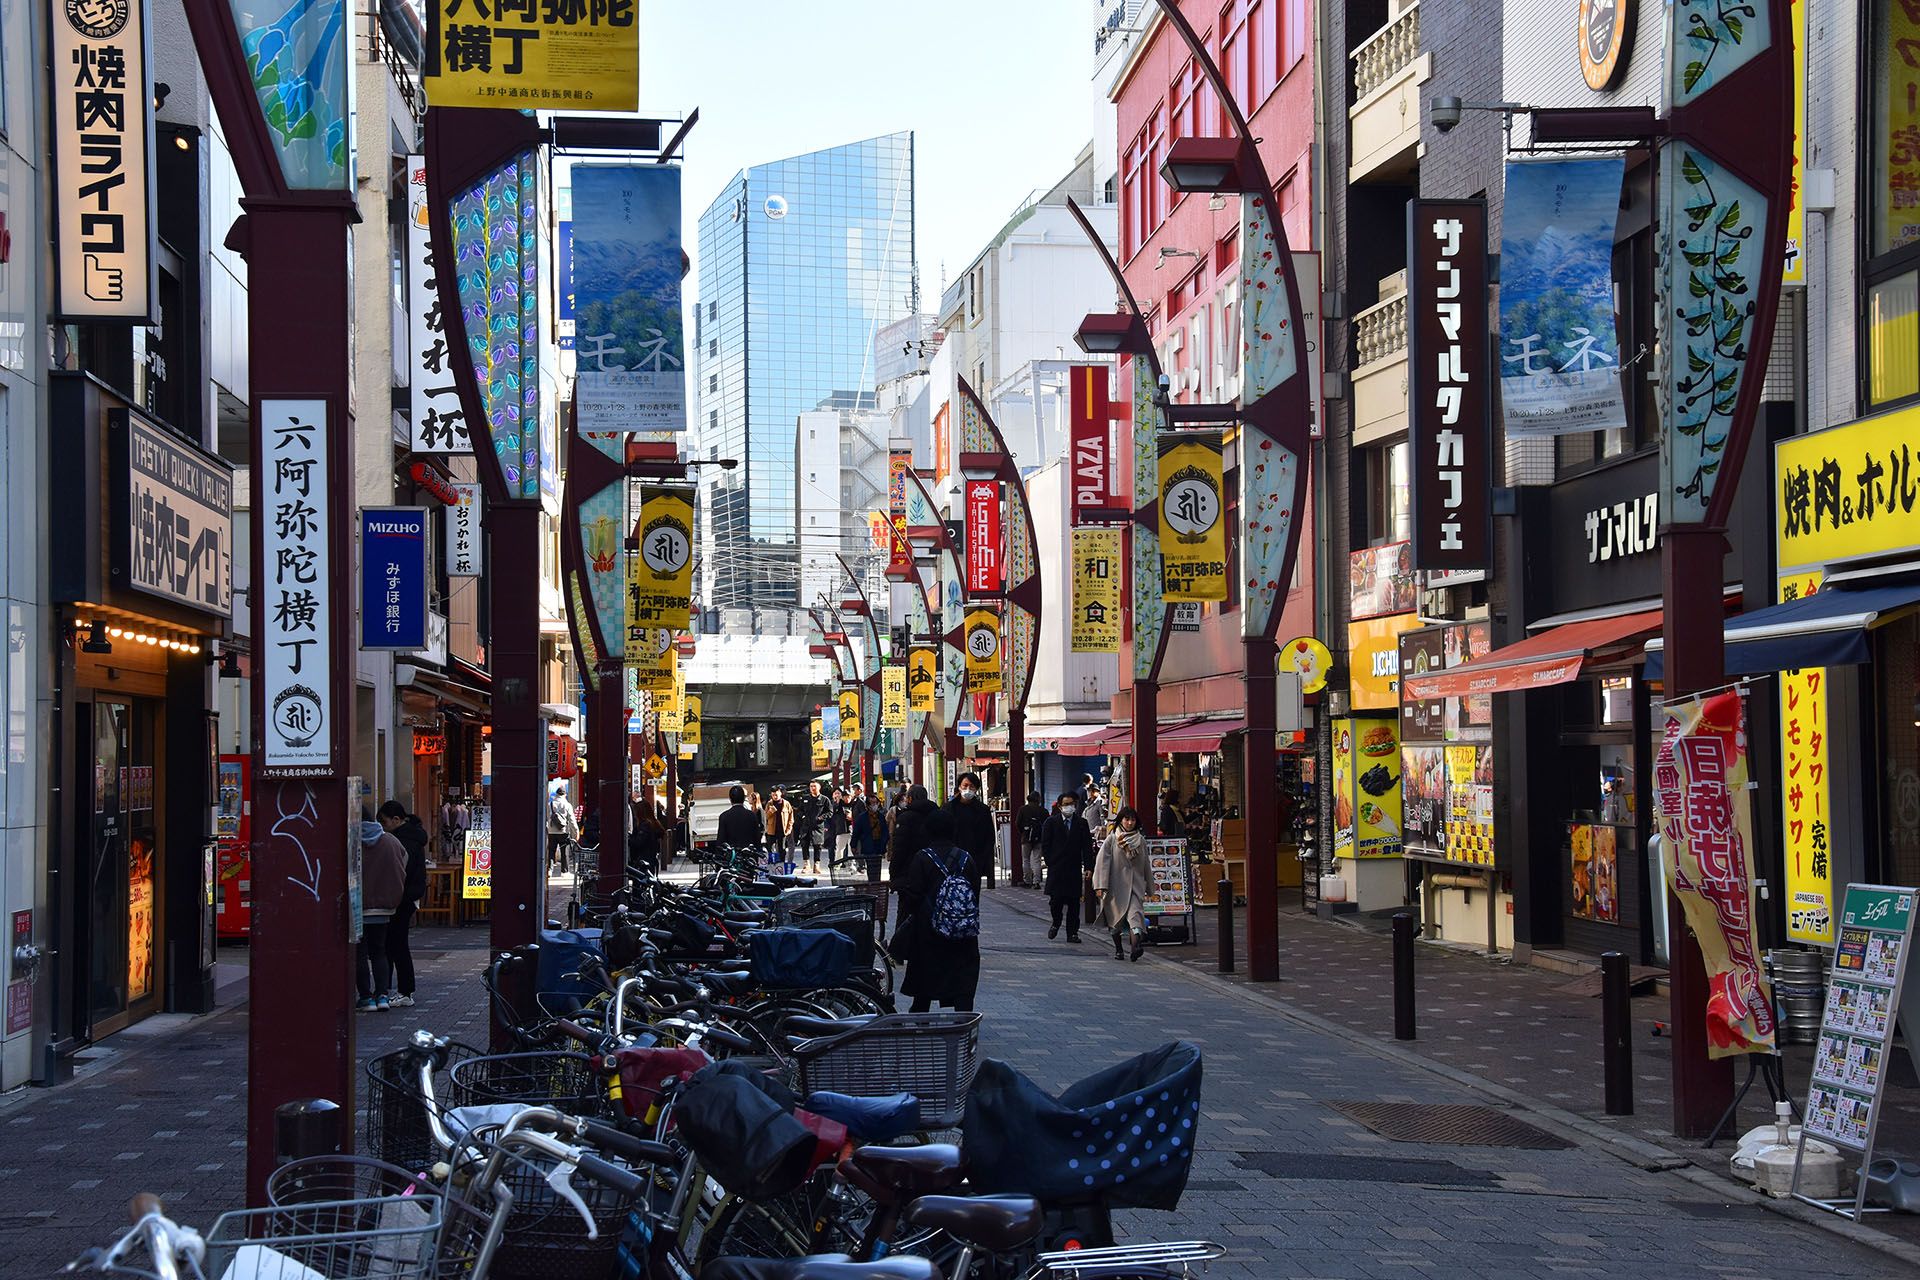 #Euer Shopping-Guide für Japan